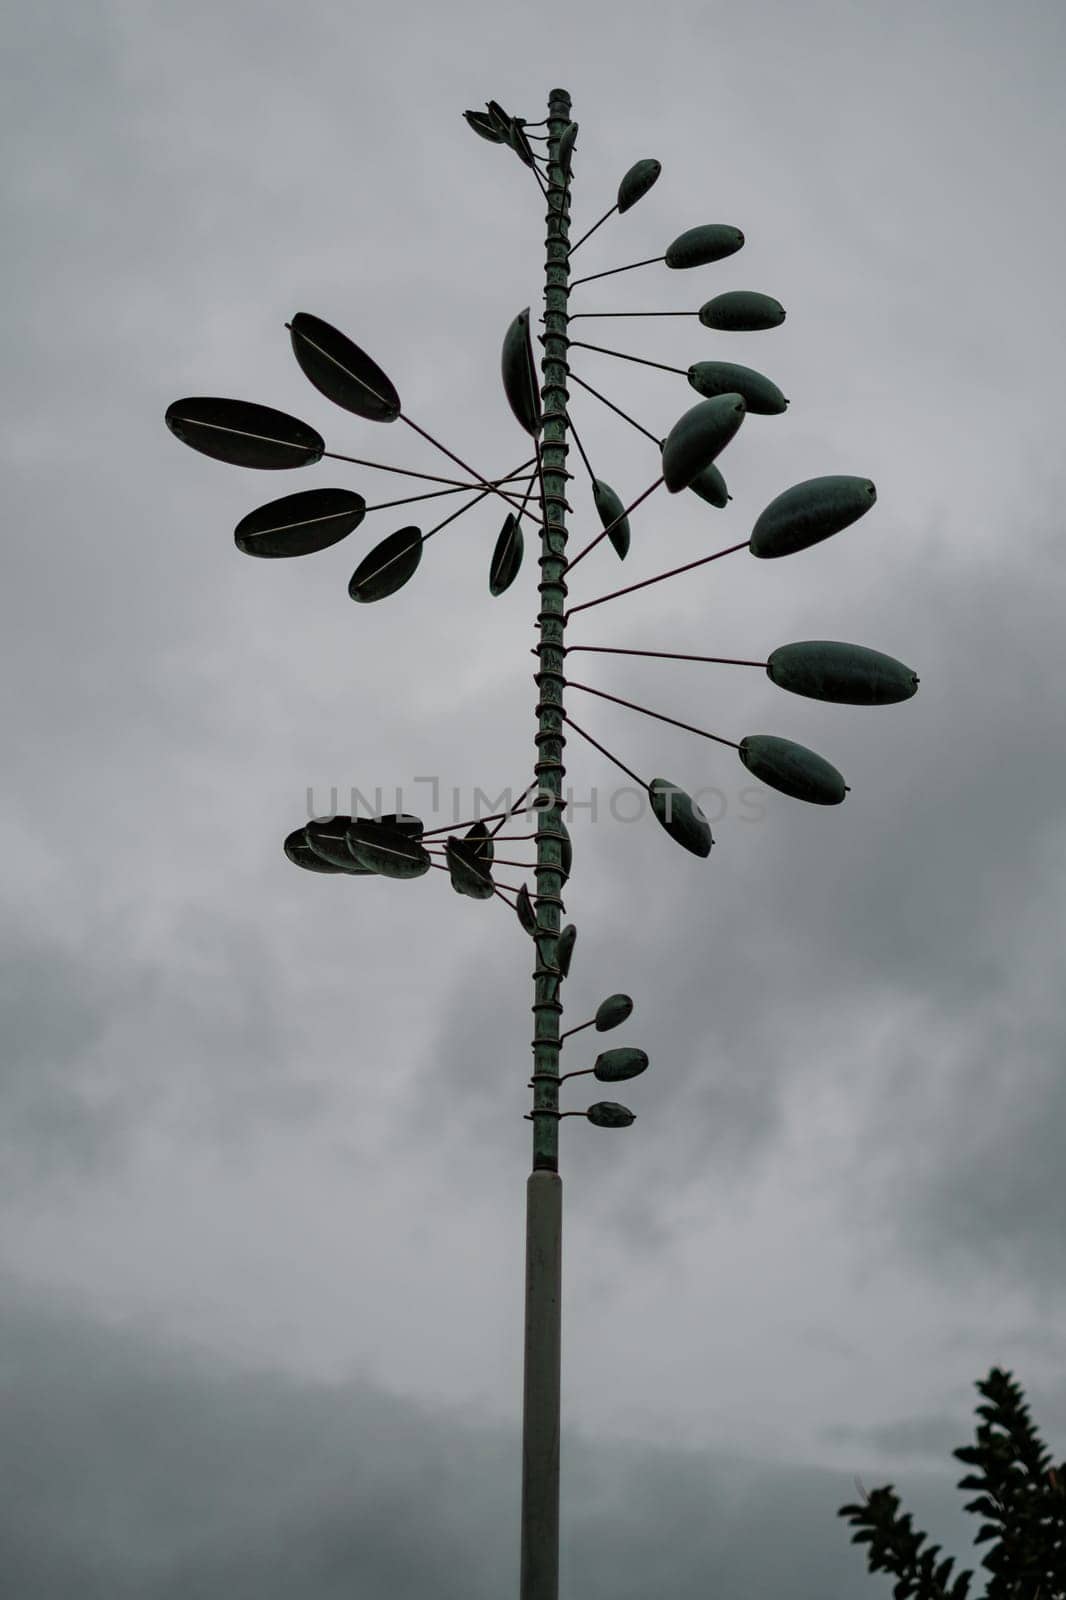 Unique Wind Vane Design Under Gloomy Sky